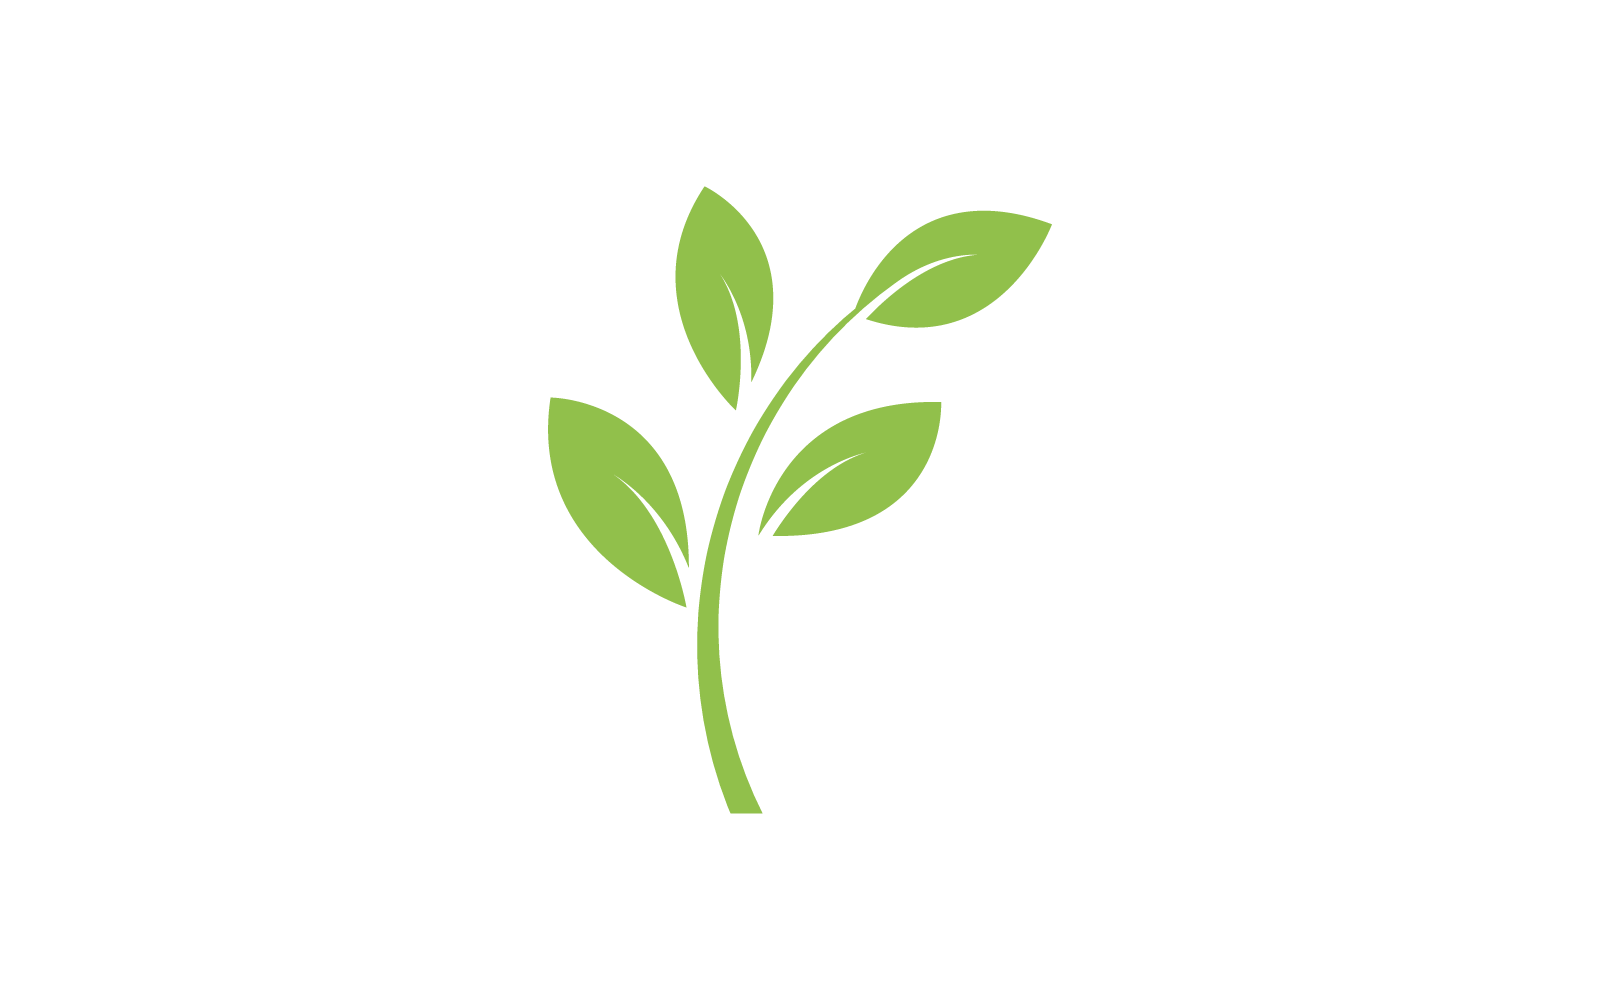 Green leaf design logo icon vector template